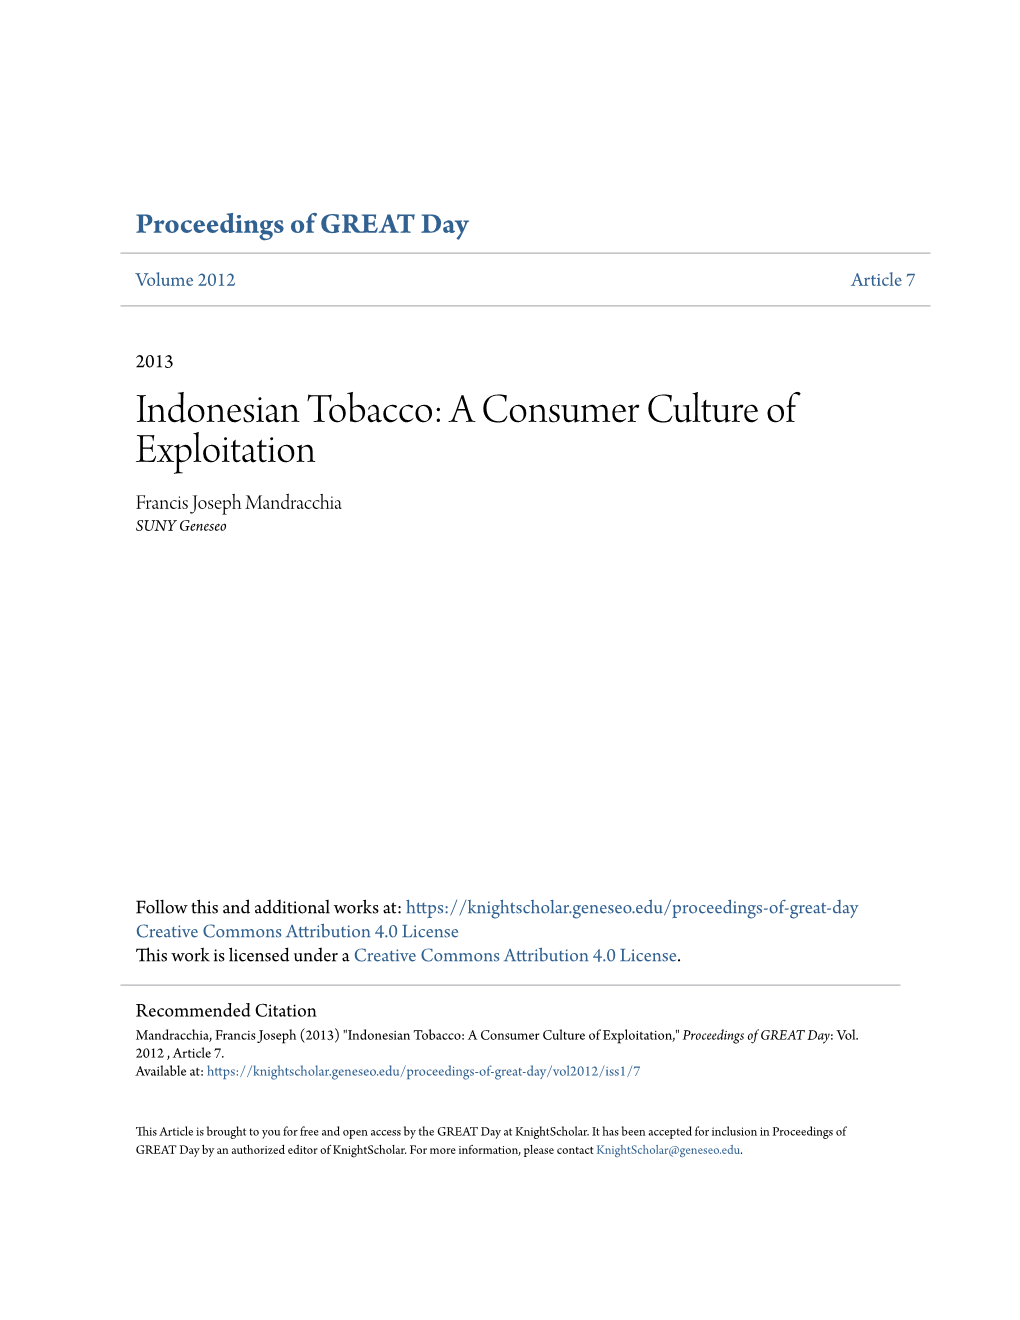 Indonesian Tobacco: a Consumer Culture of Exploitation Francis Joseph Mandracchia SUNY Geneseo